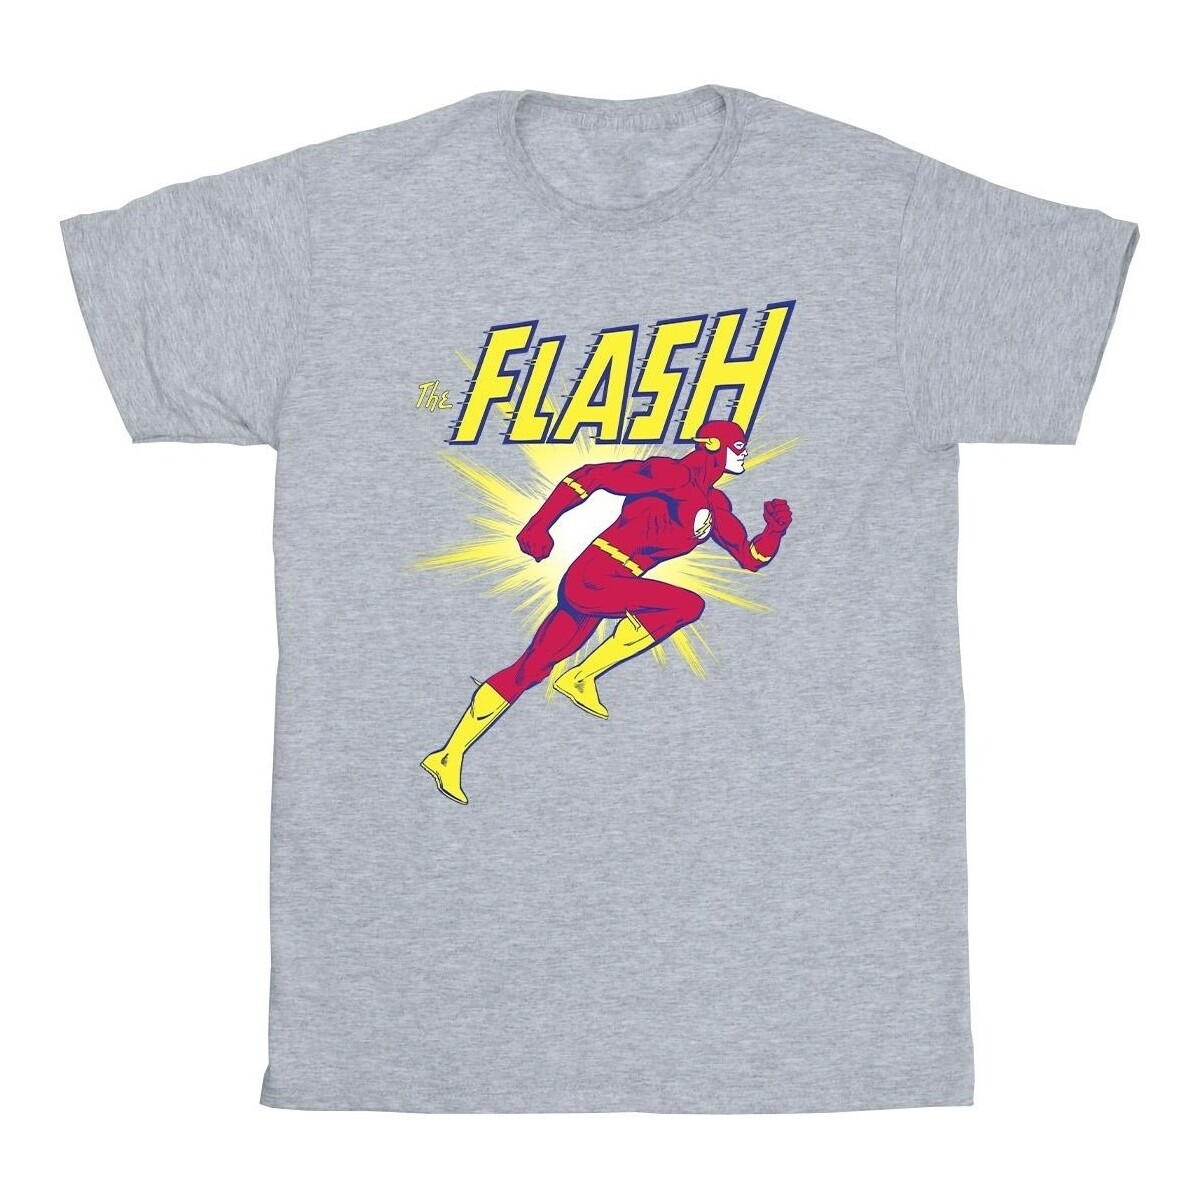 Vêtements Garçon T-shirts manches courtes Dc Comics The Flash Running Gris